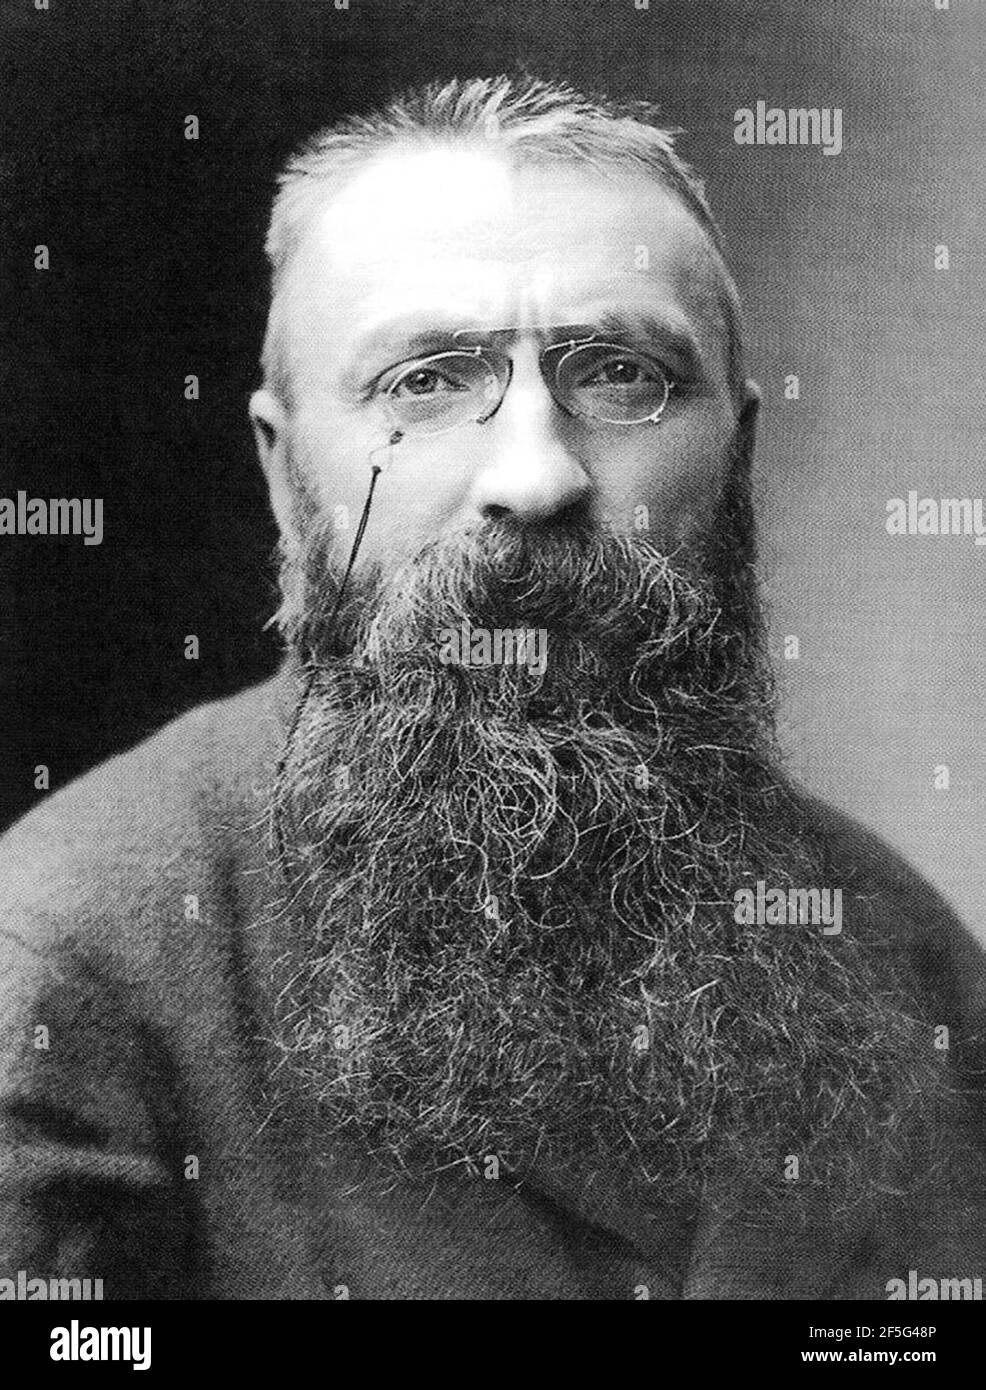 Vintage portrait photo of French sculptor Auguste Rodin (1840 – 1917). Photo circa 1891. Stock Photo